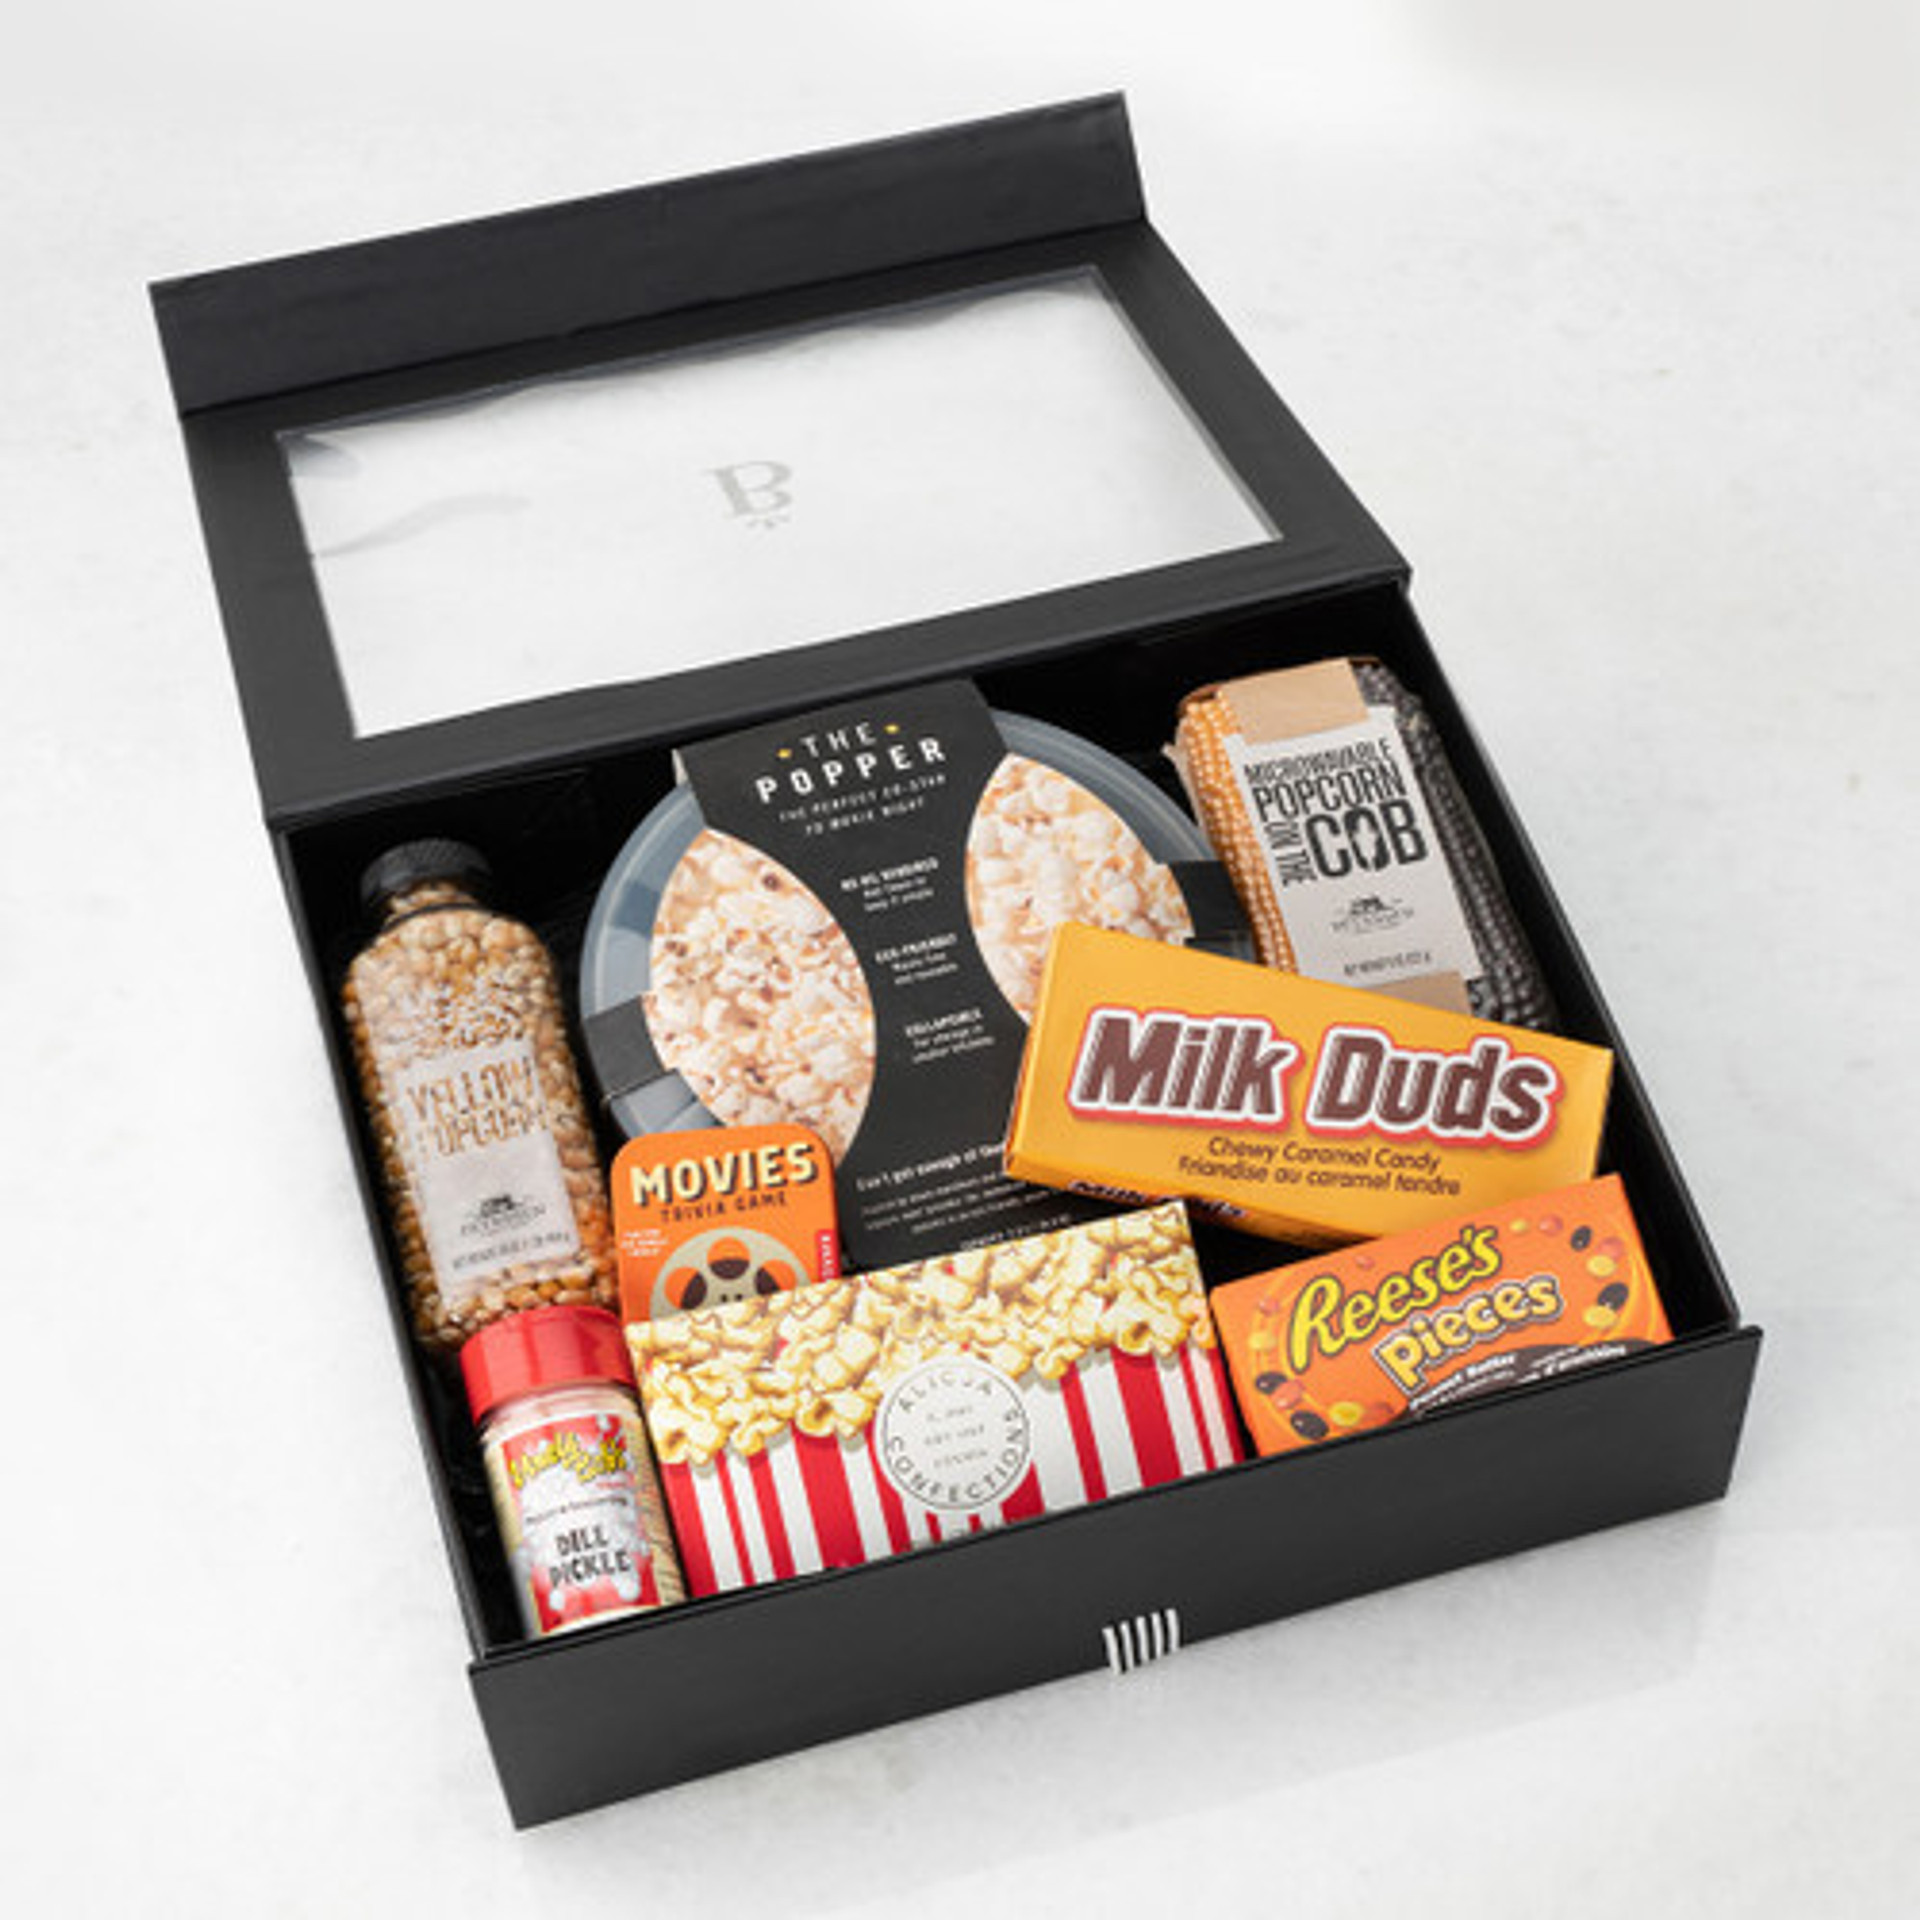 Movie themed gift box